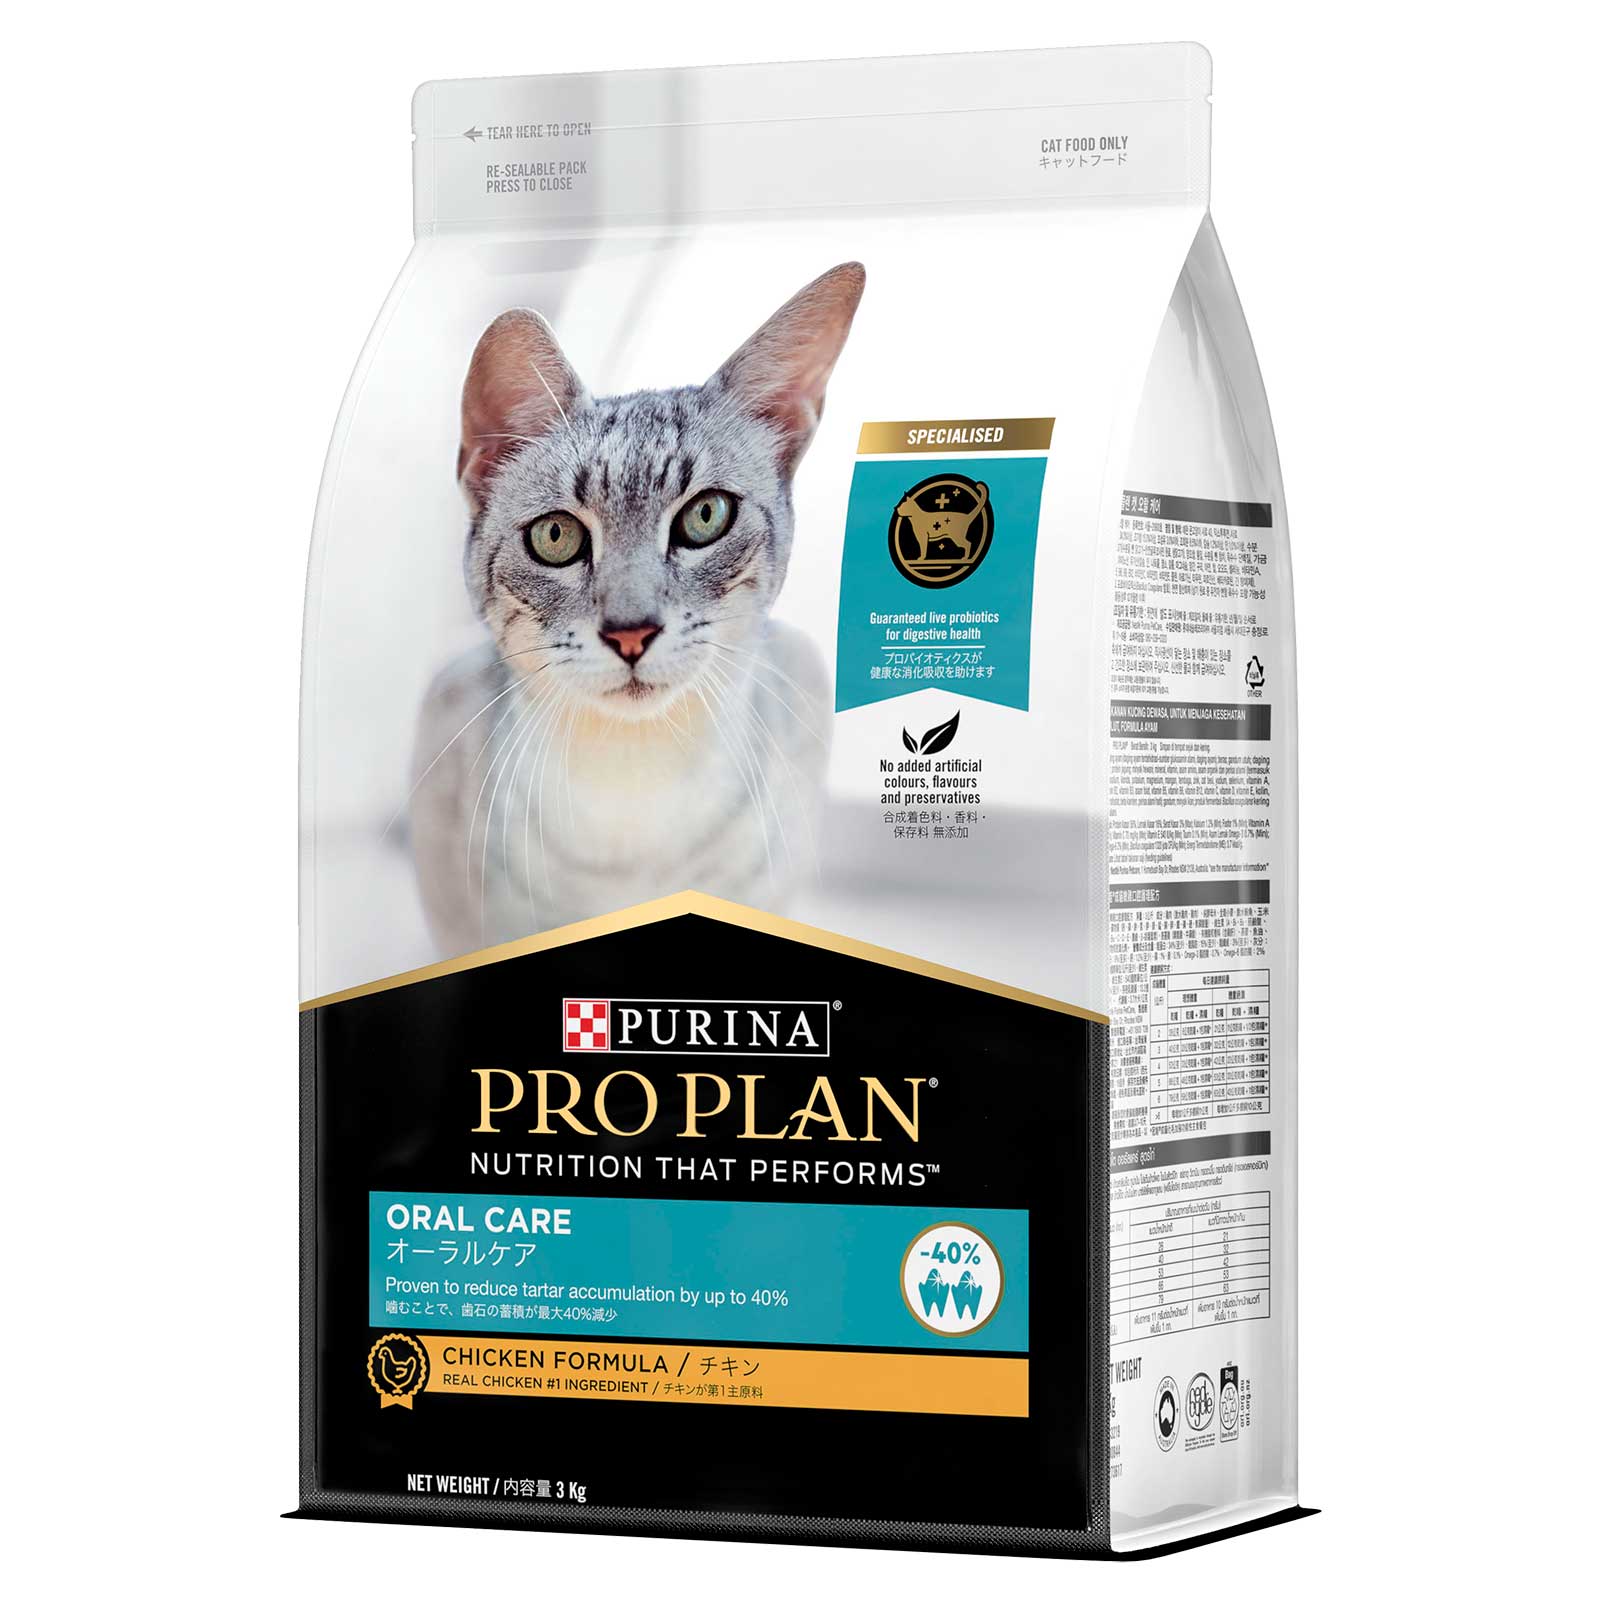 Pro Plan Cat Food Adult Oral Care